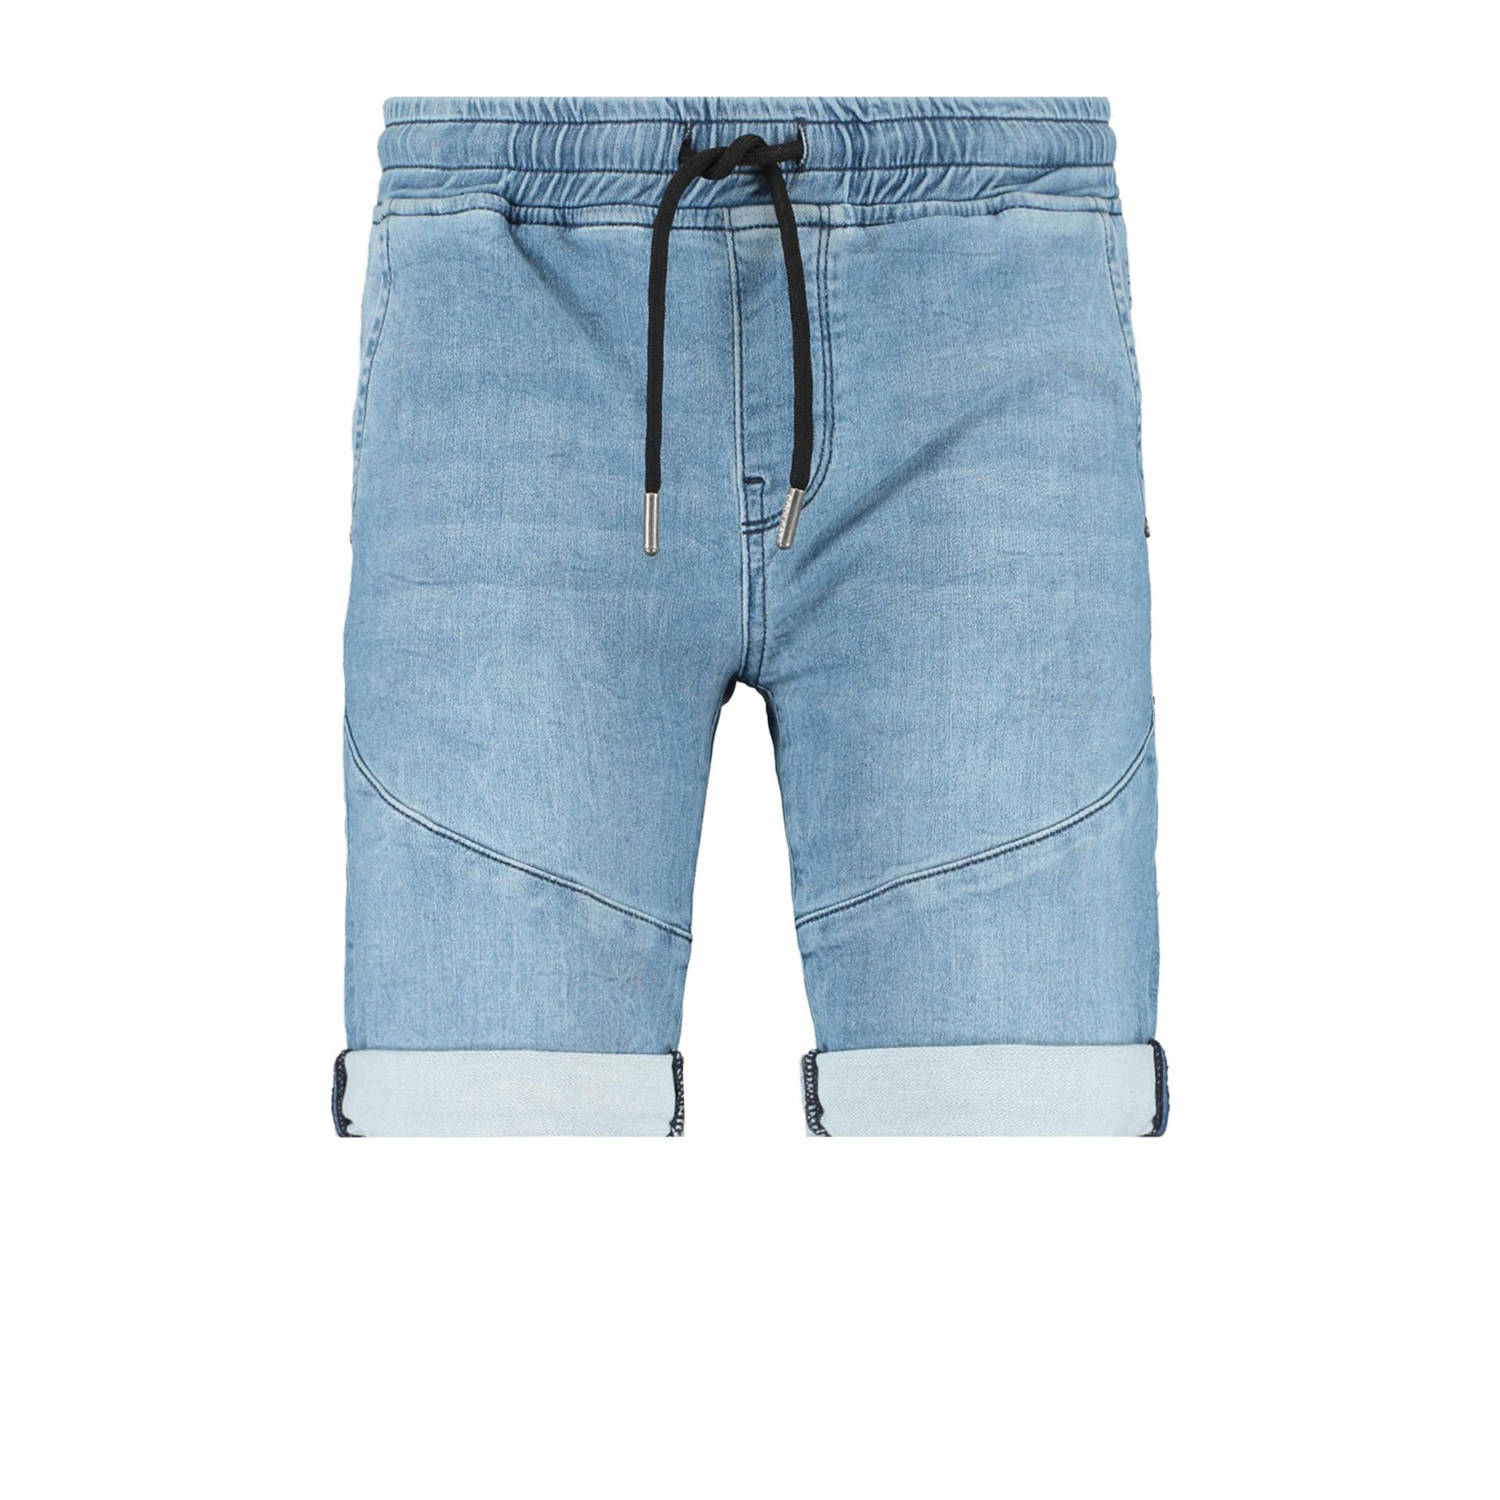 CoolCat Junior jeans bermuda Nobe light denim short Blauw Jongens Stretchdenim 146 152